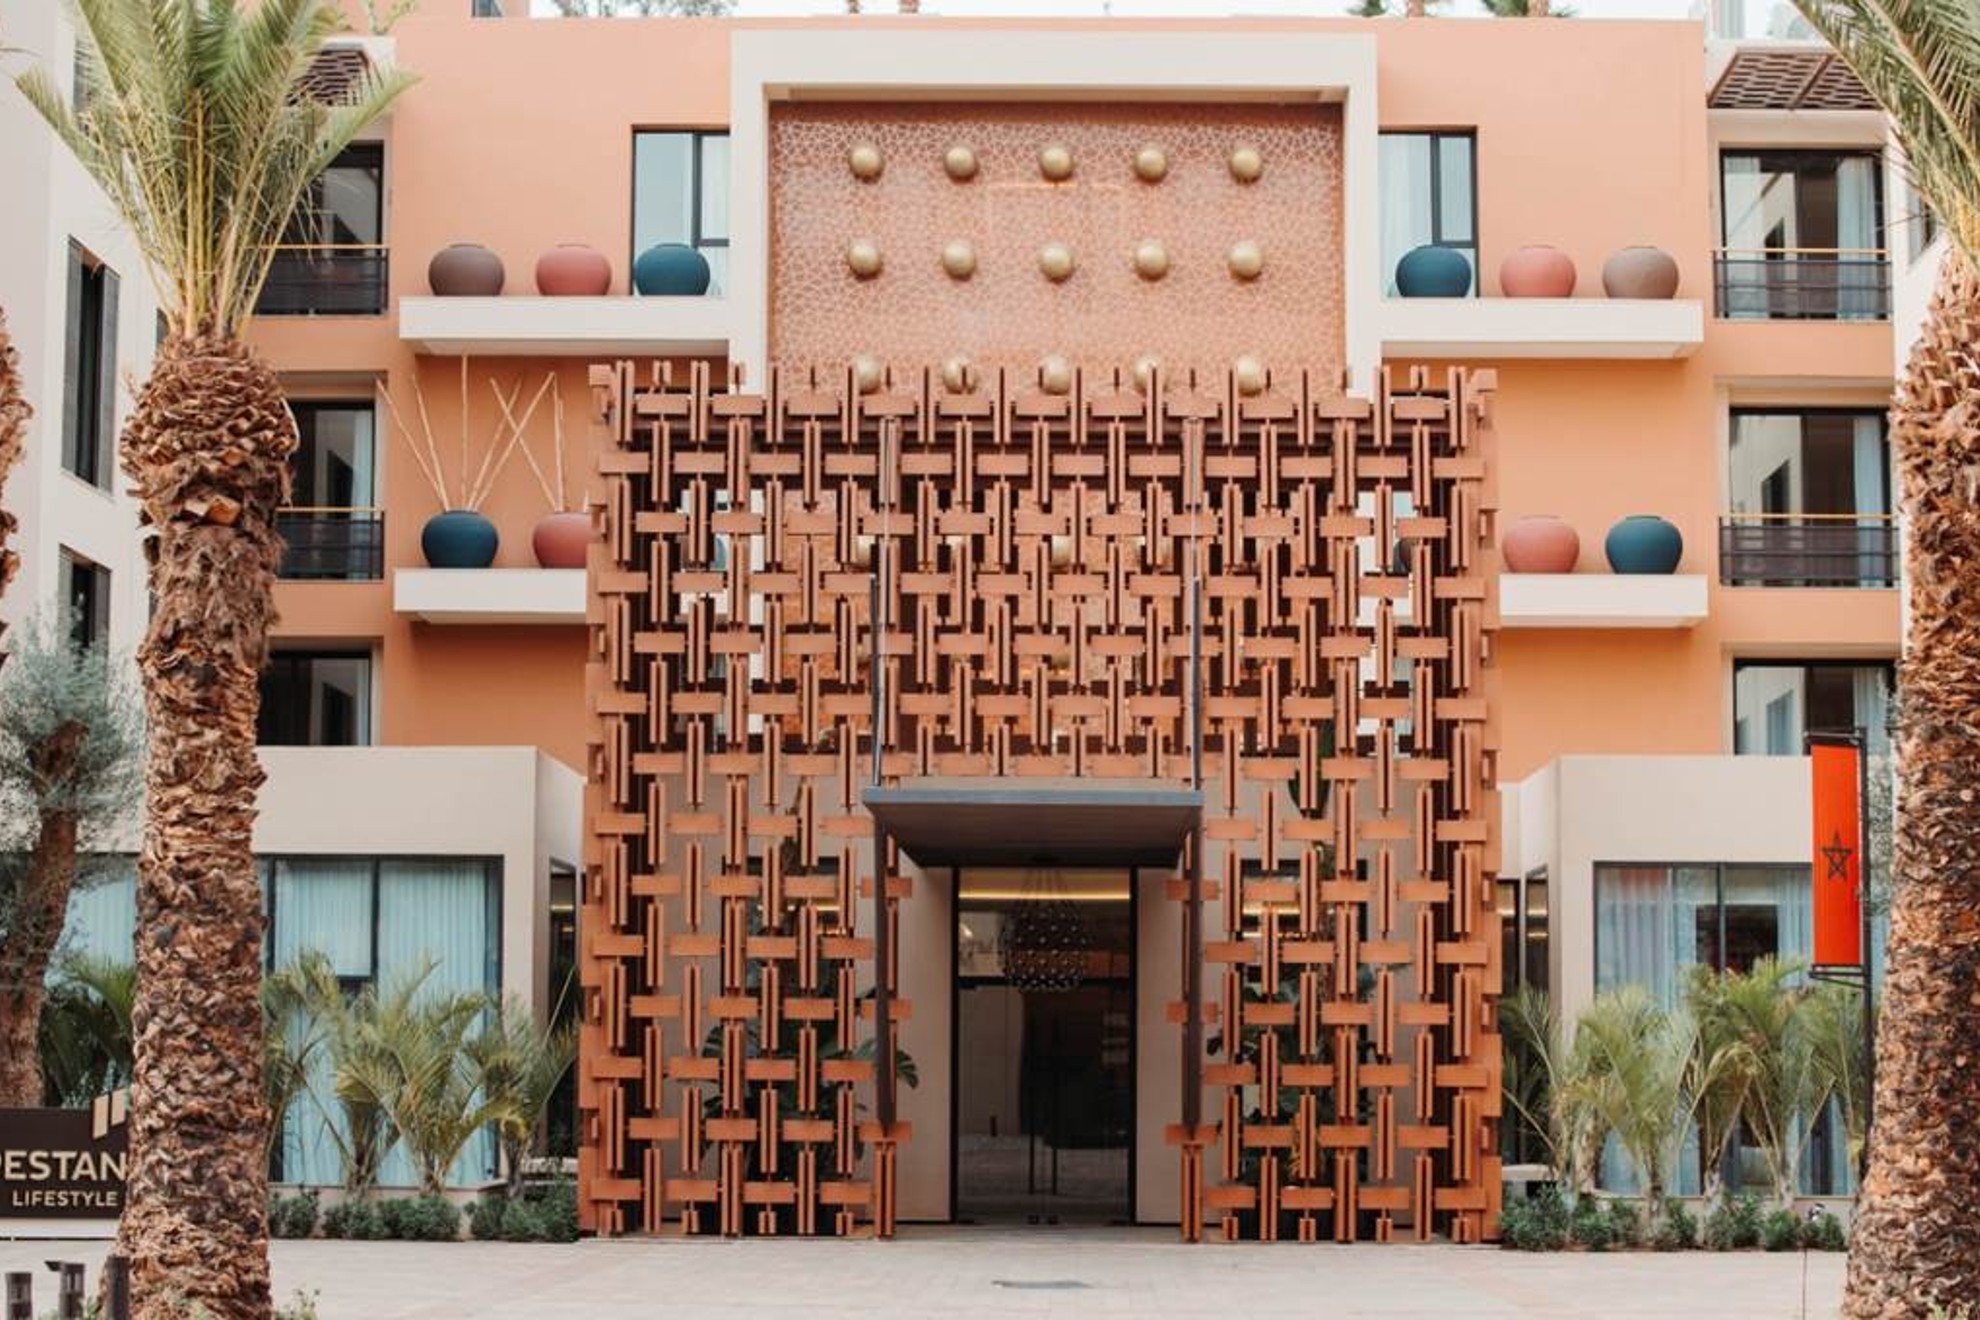 The entrance to Cristiano Ronaldo's hotel in Marrakech